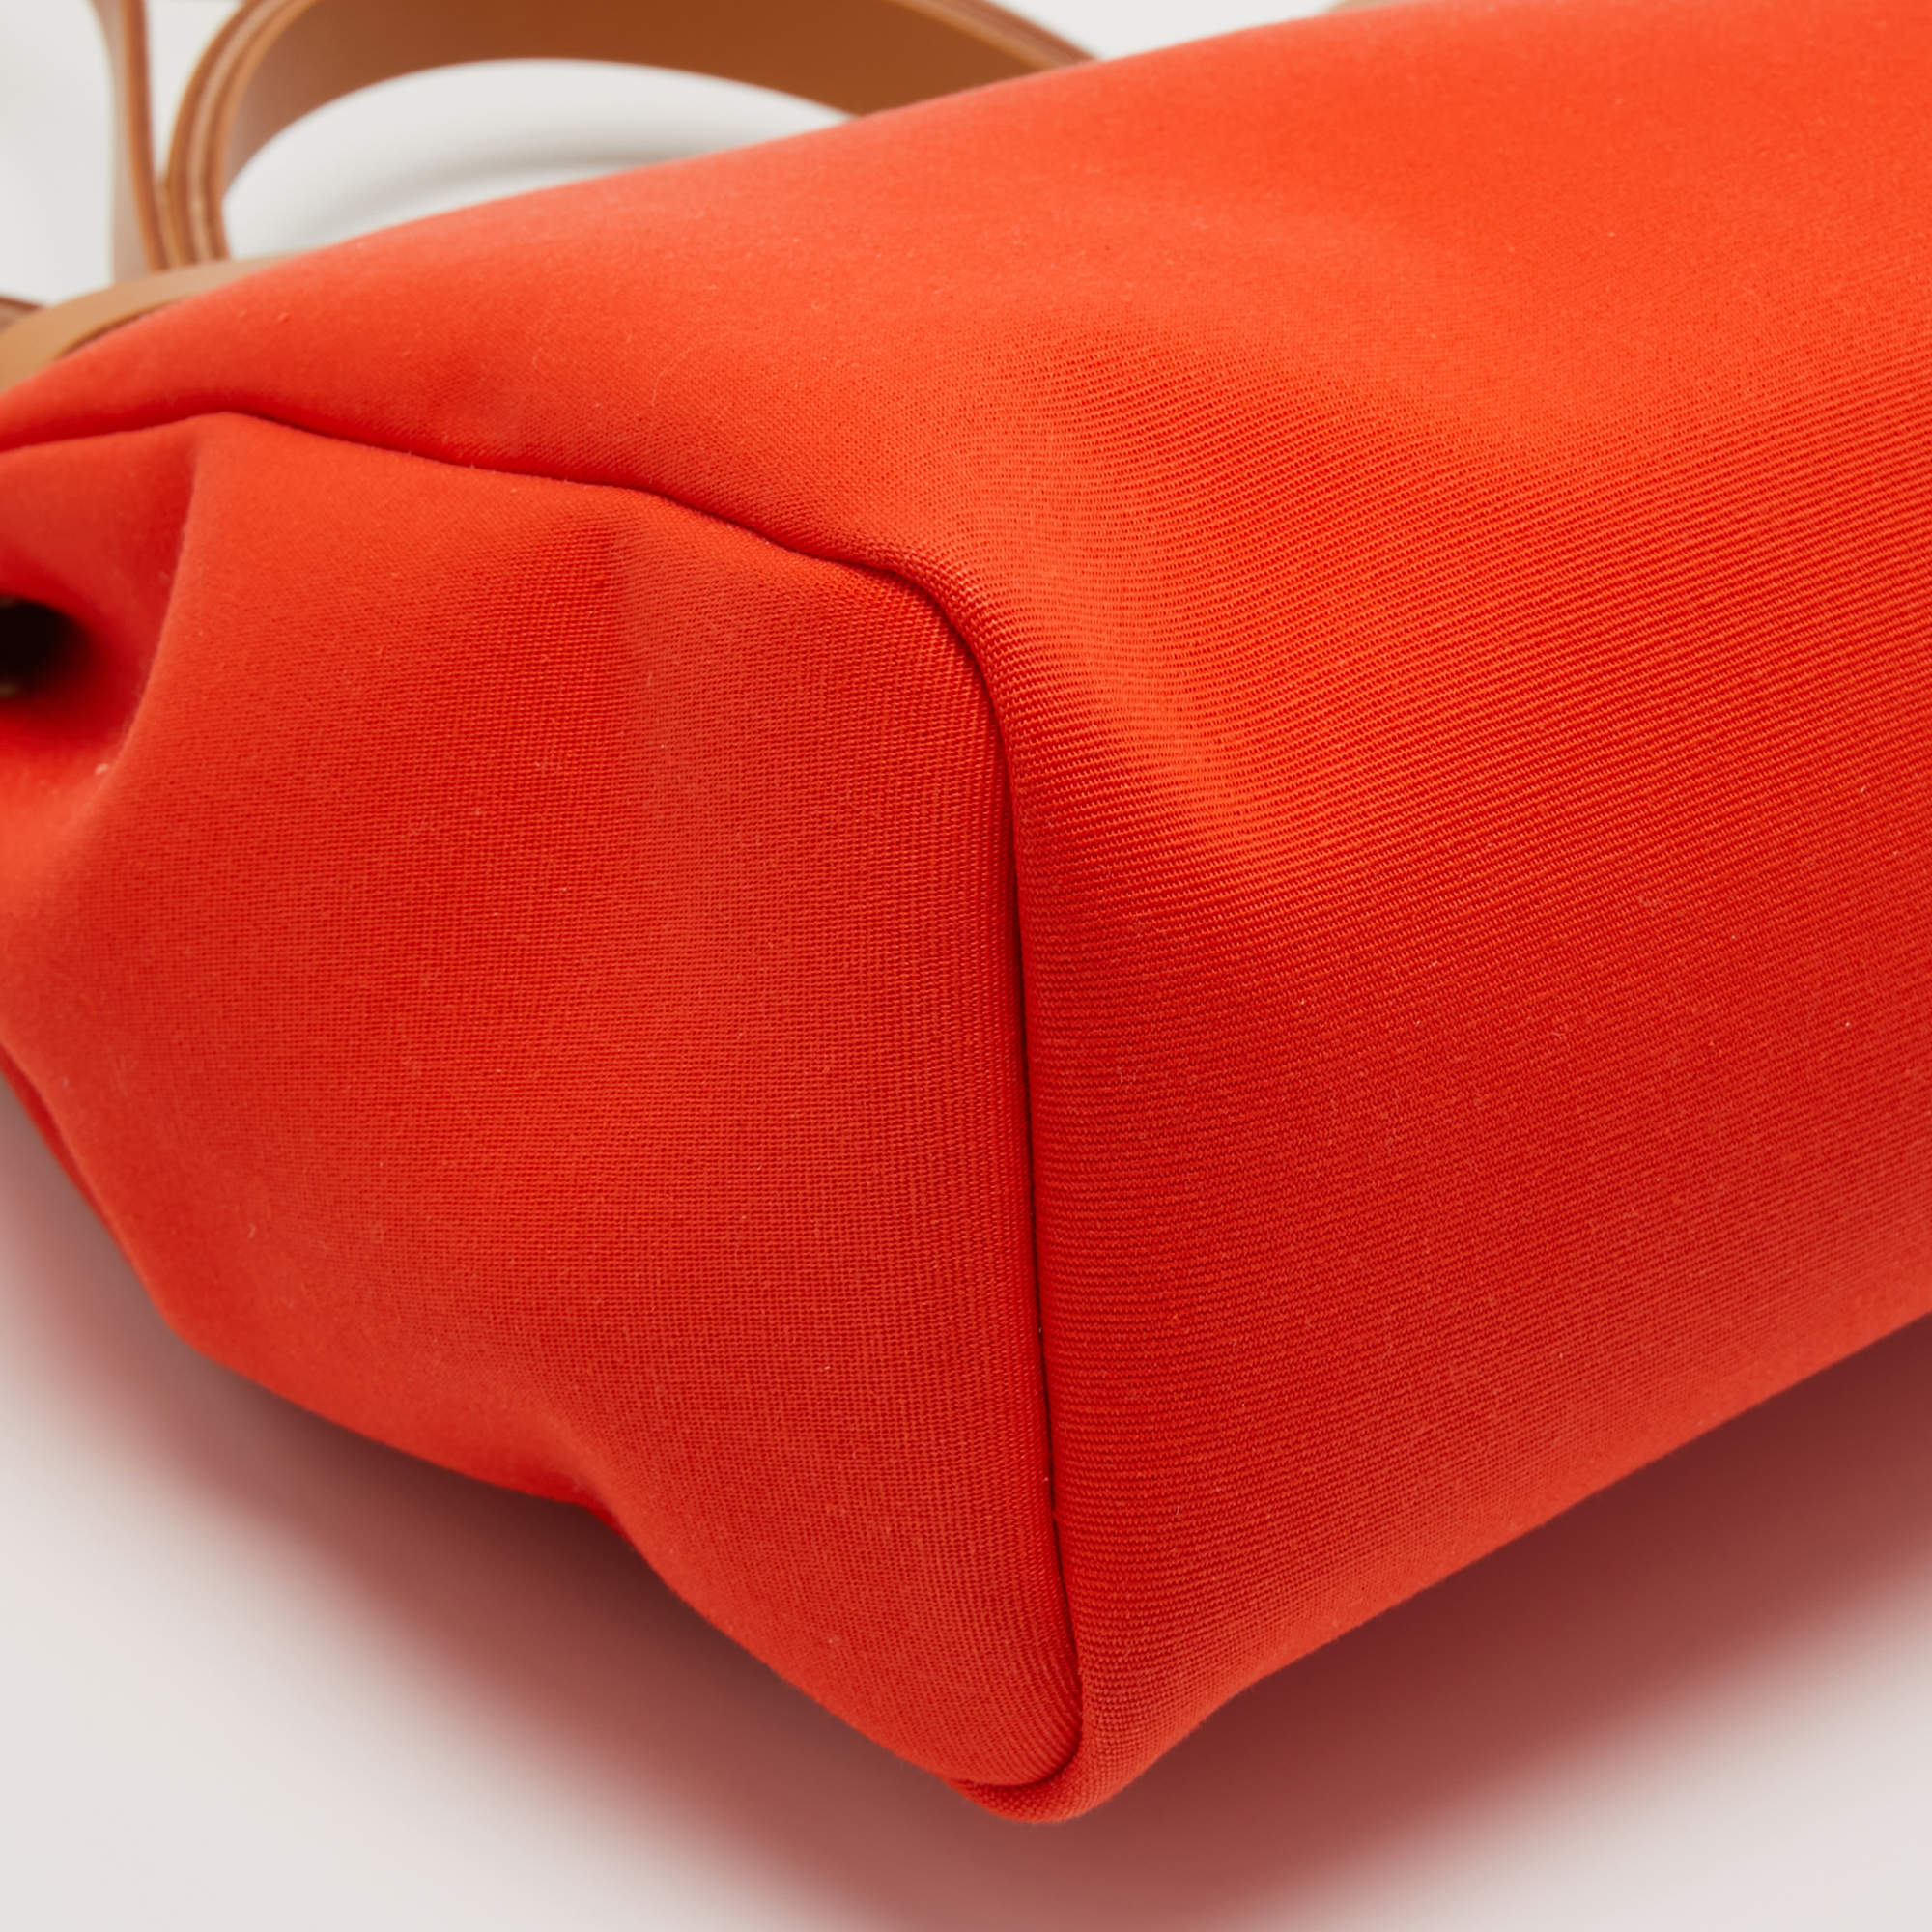 Herbag handbag Hermès Orange in Cotton - 11909993